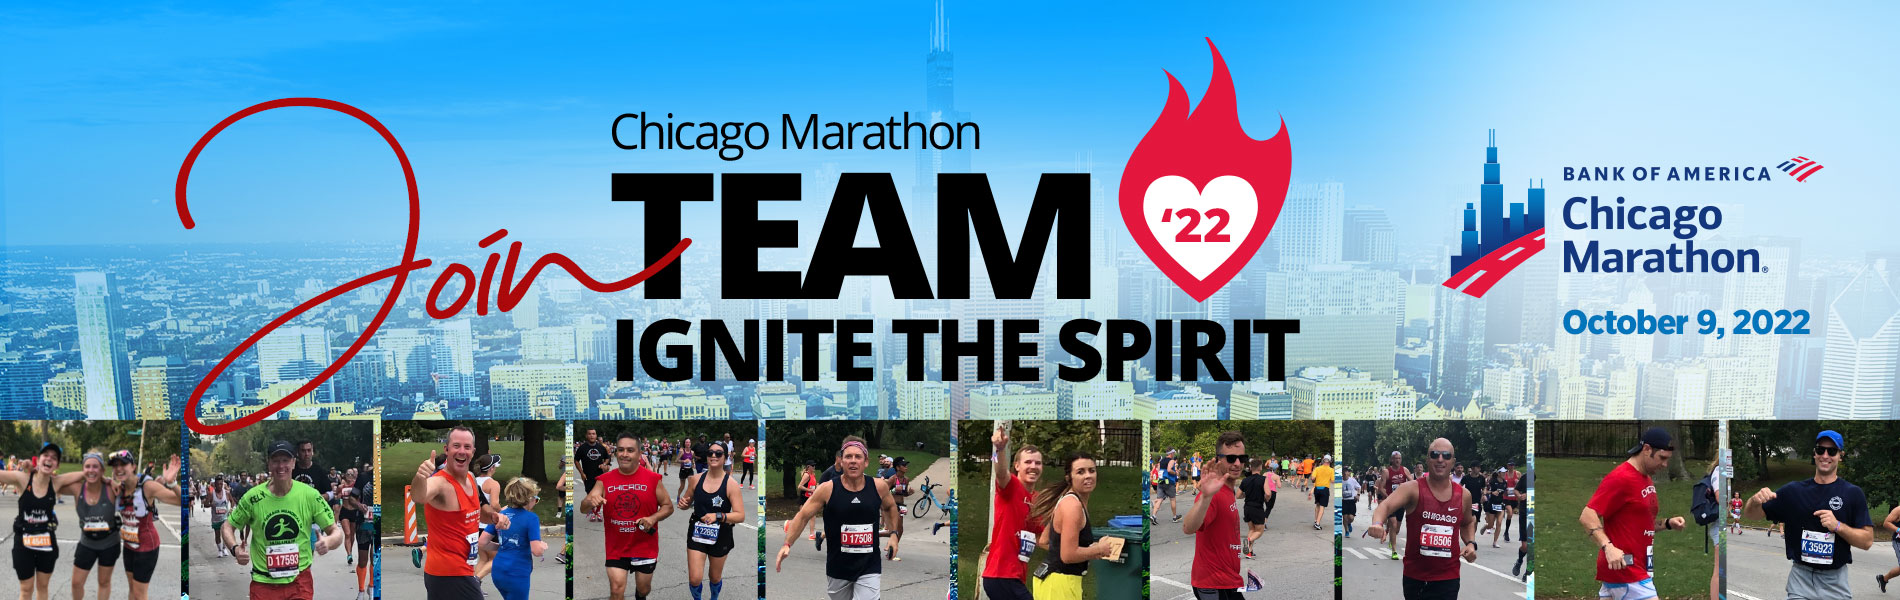 Chicago Marathon Team